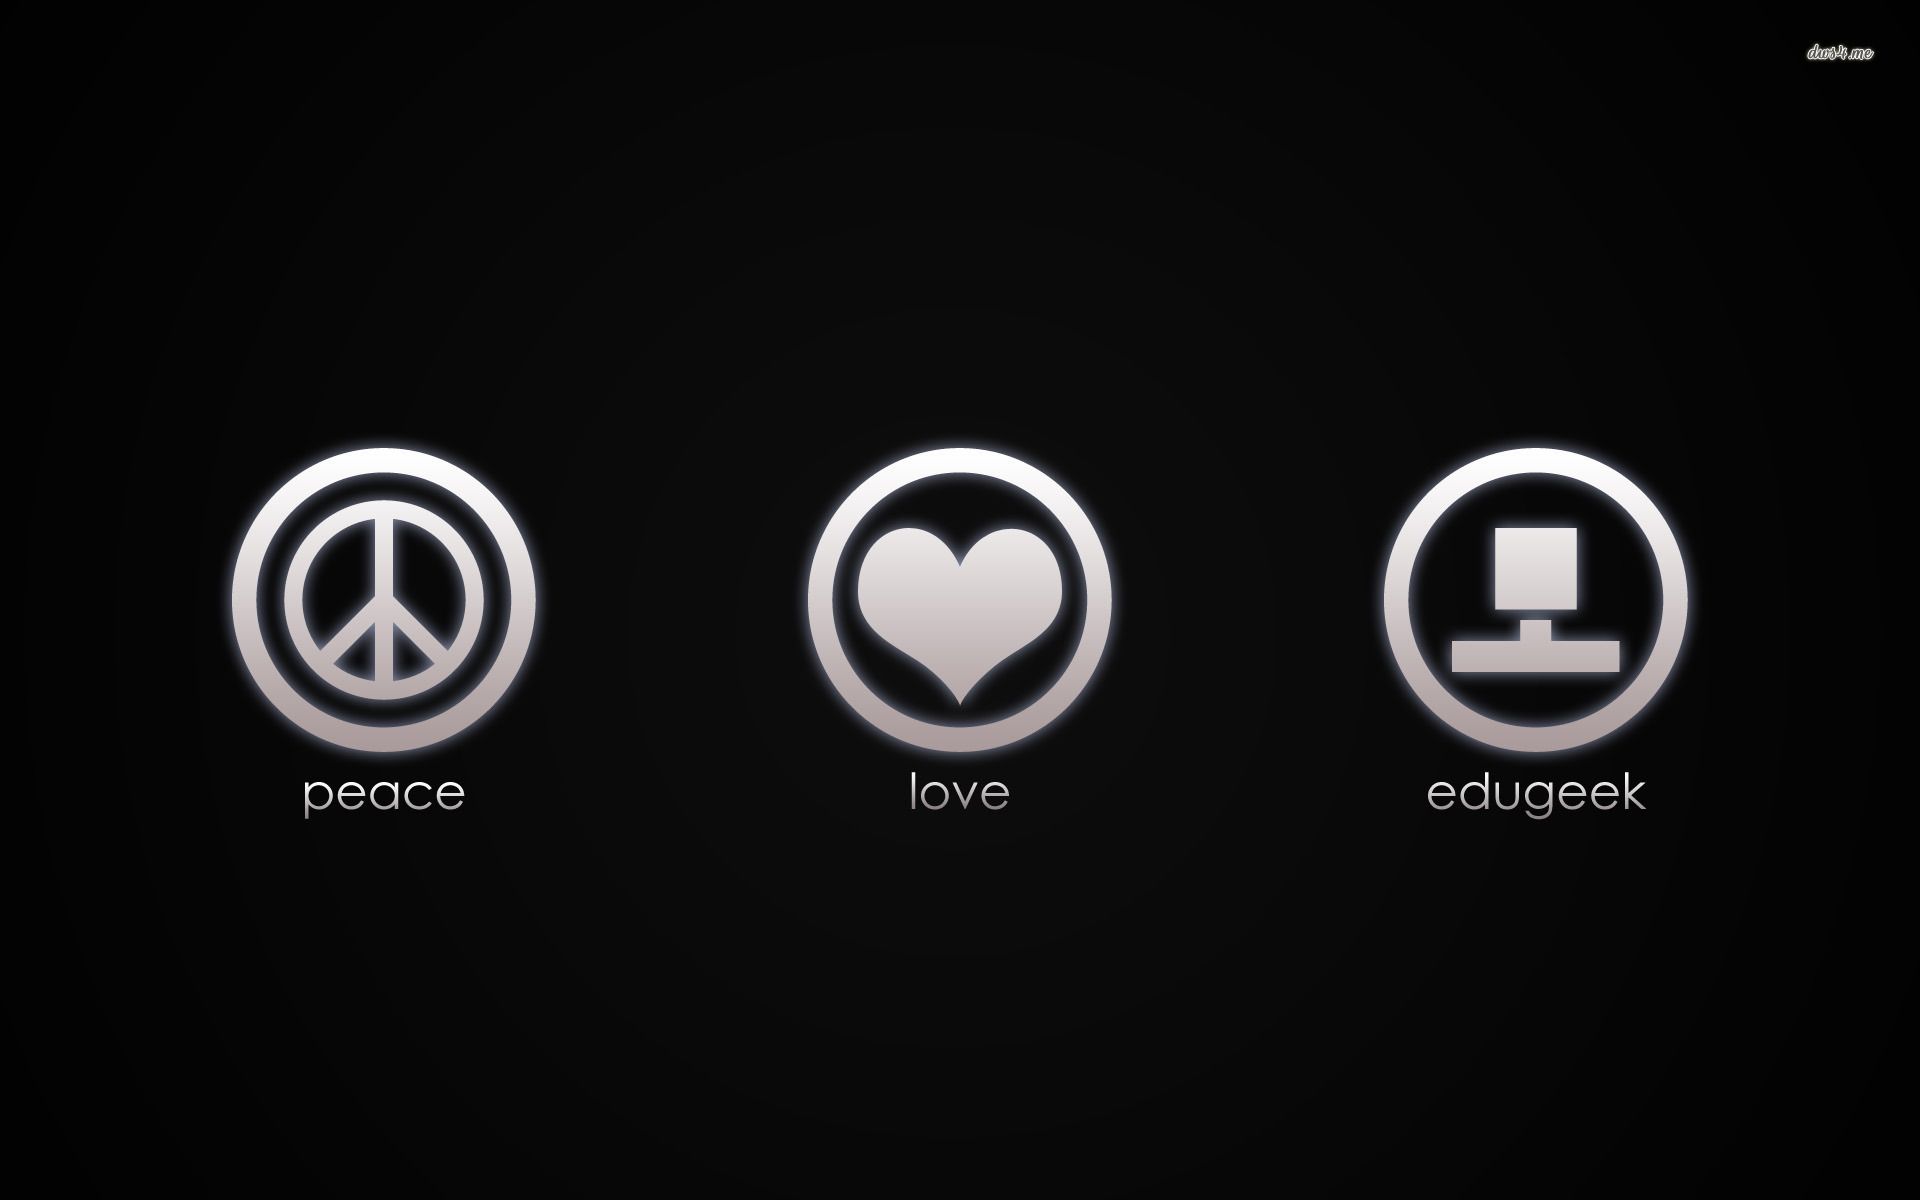 Peace, Love, Edugeek wallpaper - Digital Art wallpapers - #5452